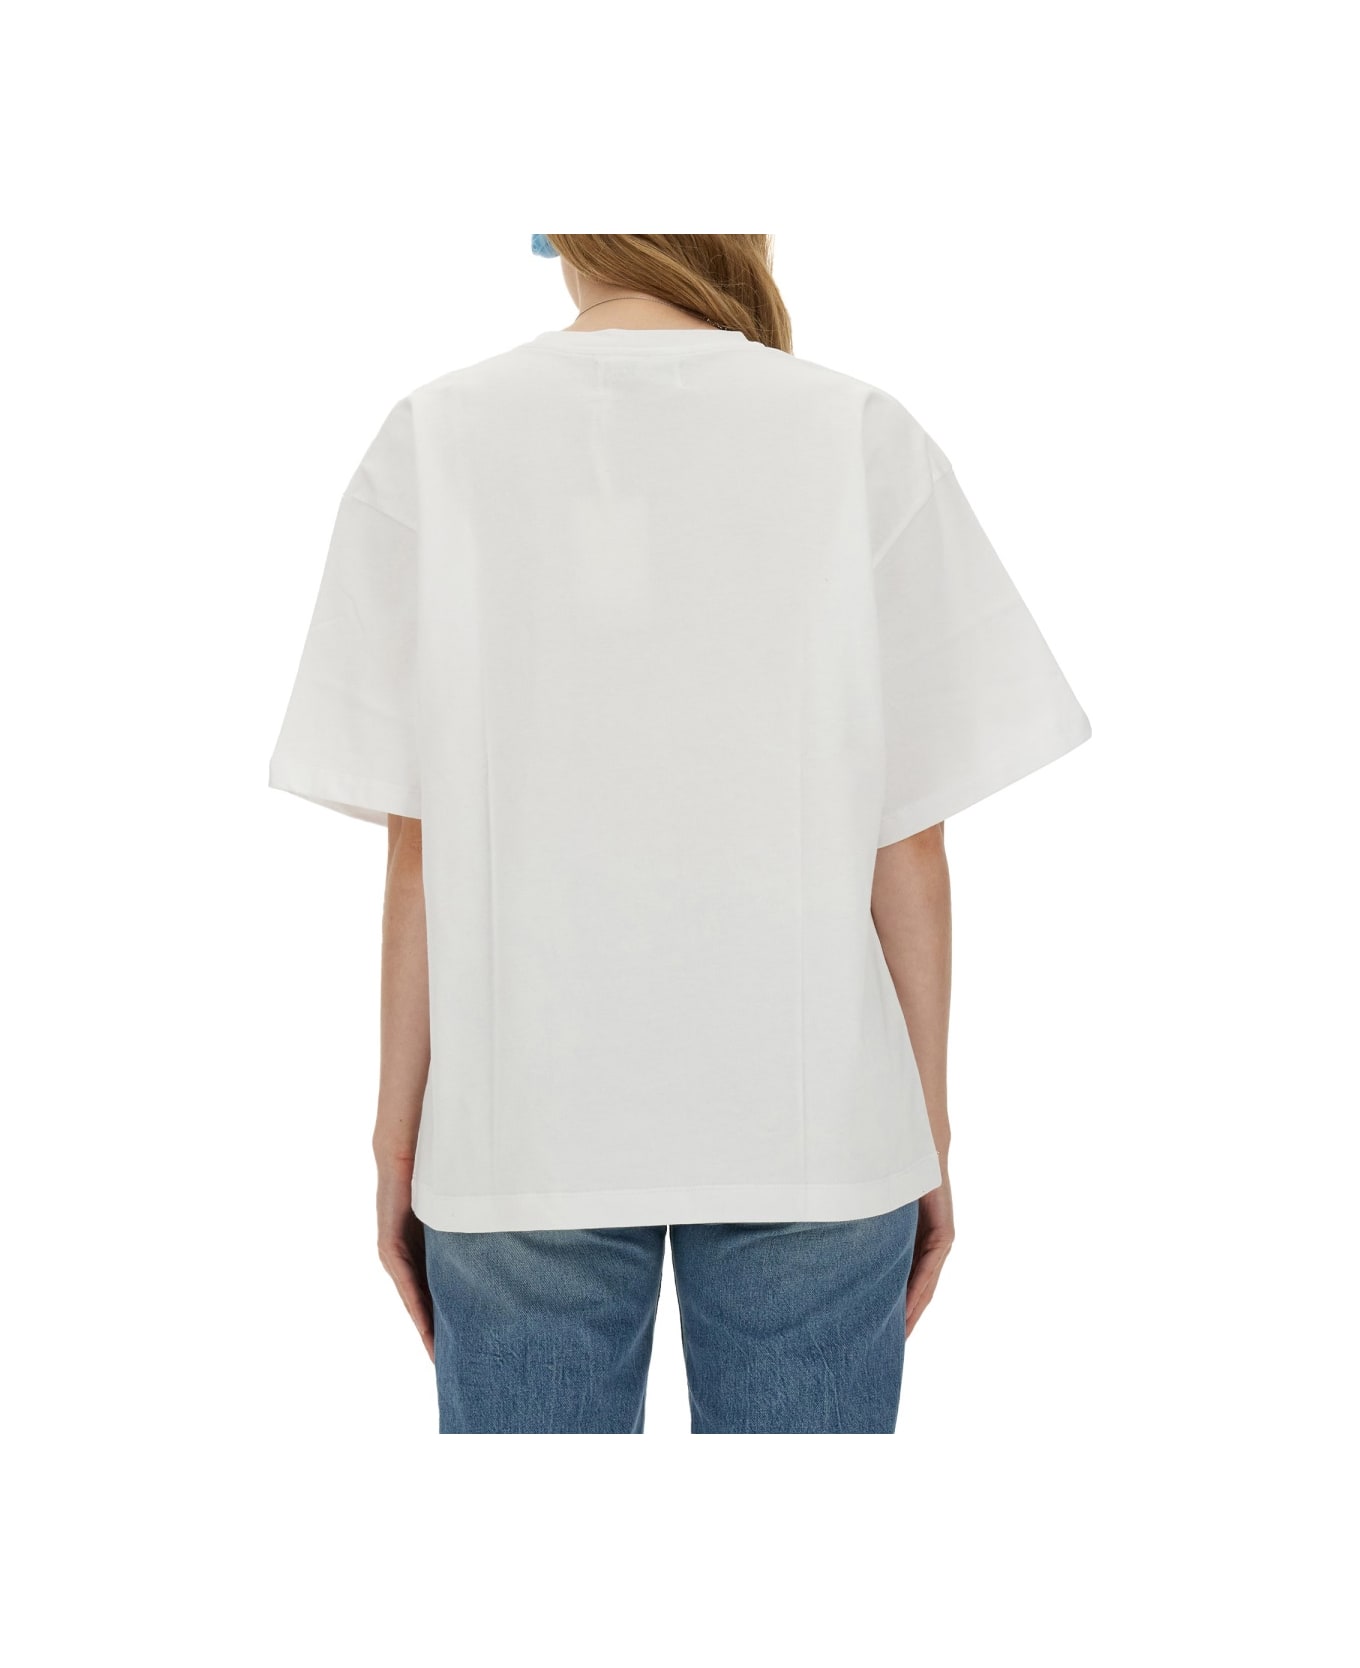 Fiorucci Lollipop Print T-shirt - WHITE